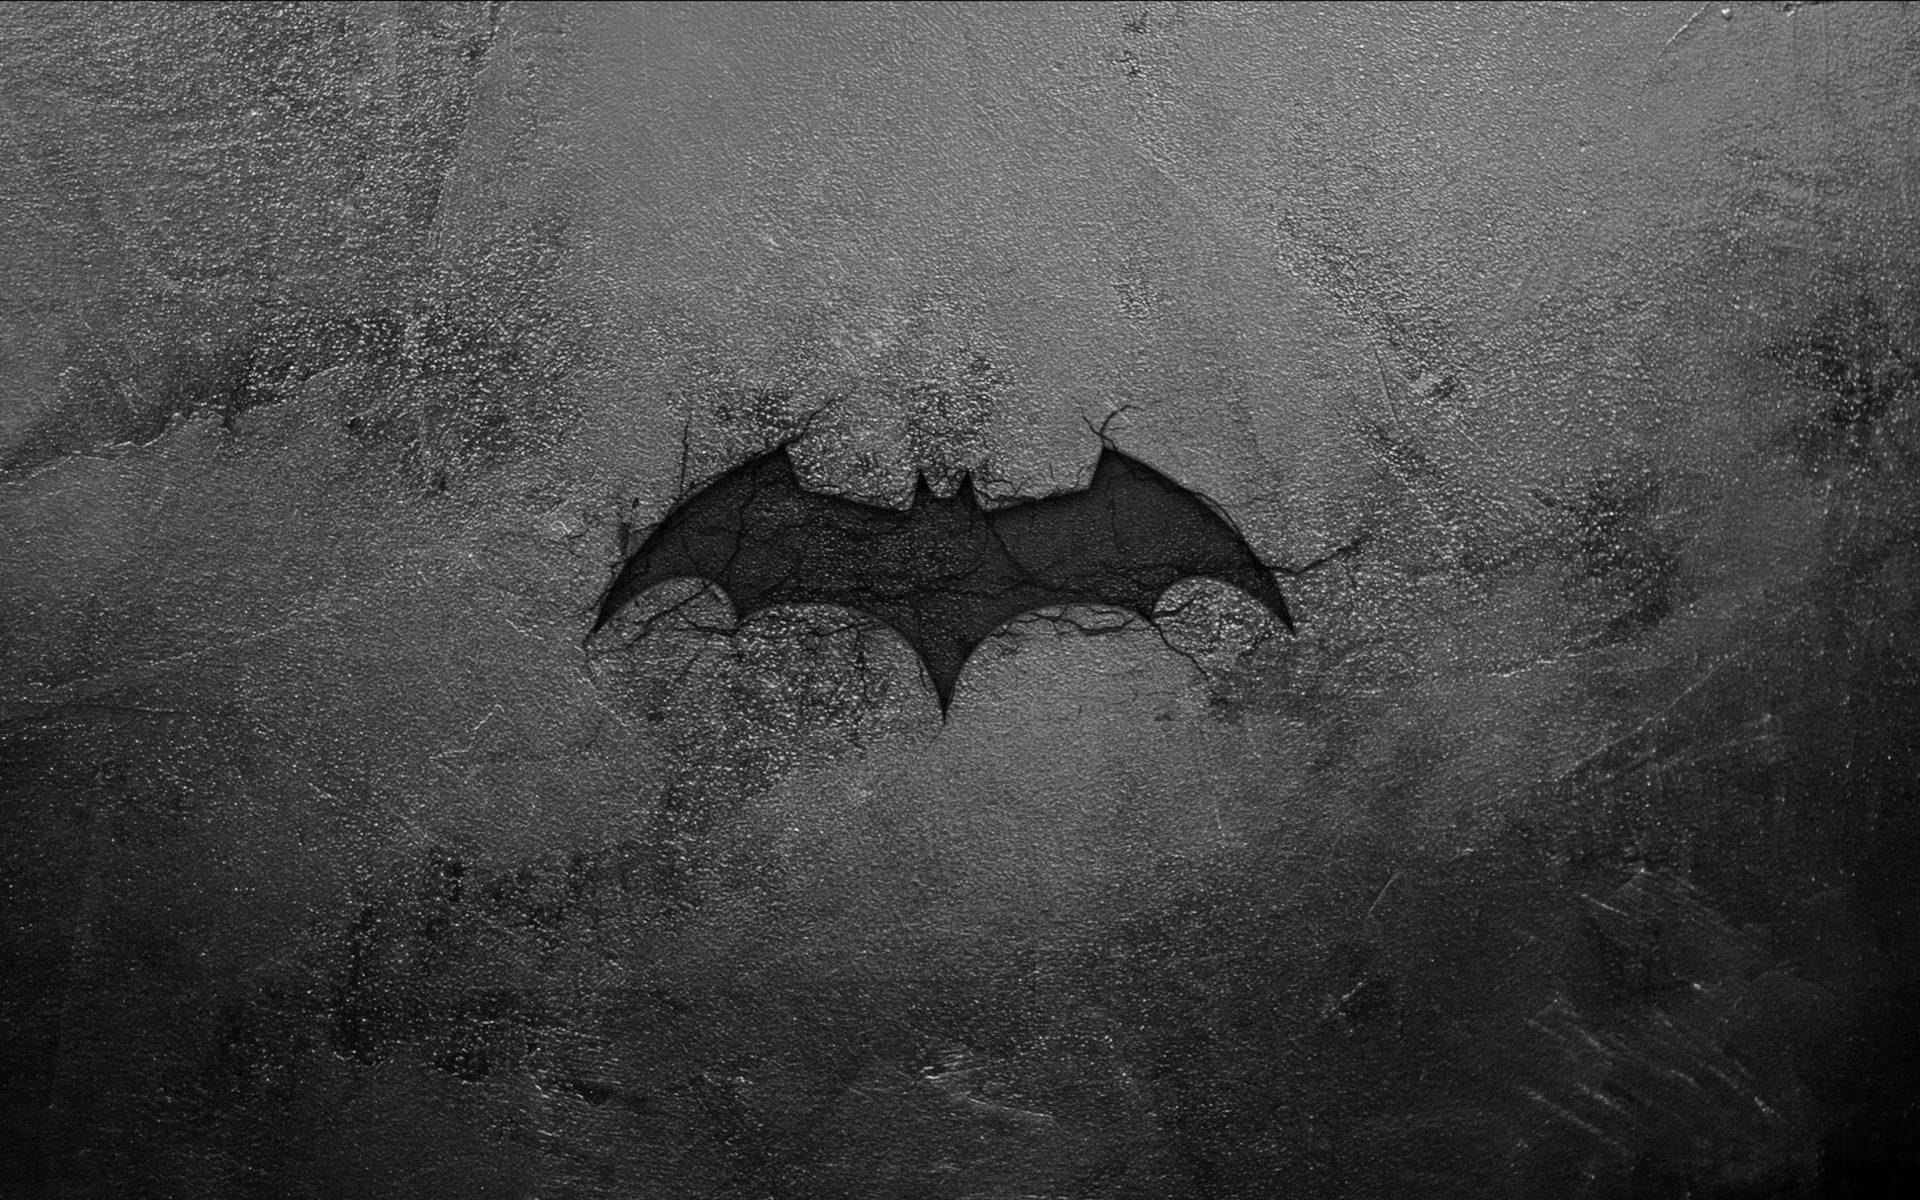 Batman Logo iPhone Wallpapers  PixelsTalkNet